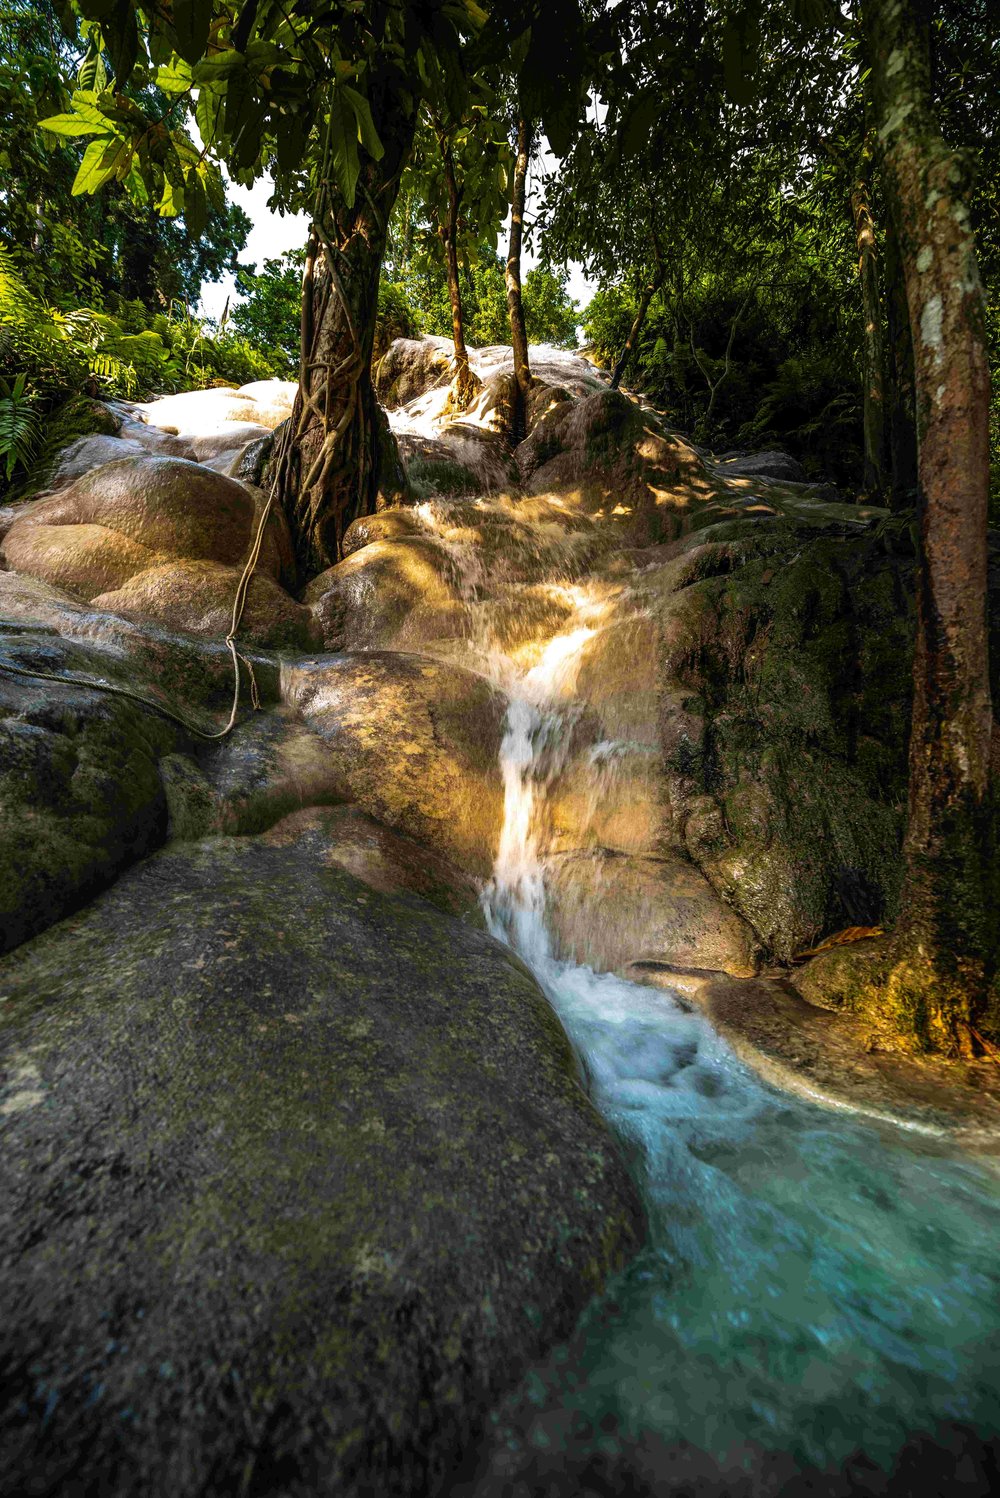 bua-tong-waterfalls-sticky-waterfall-chiang-mai-th-2021-08-26-22-28-31-utc.jpg